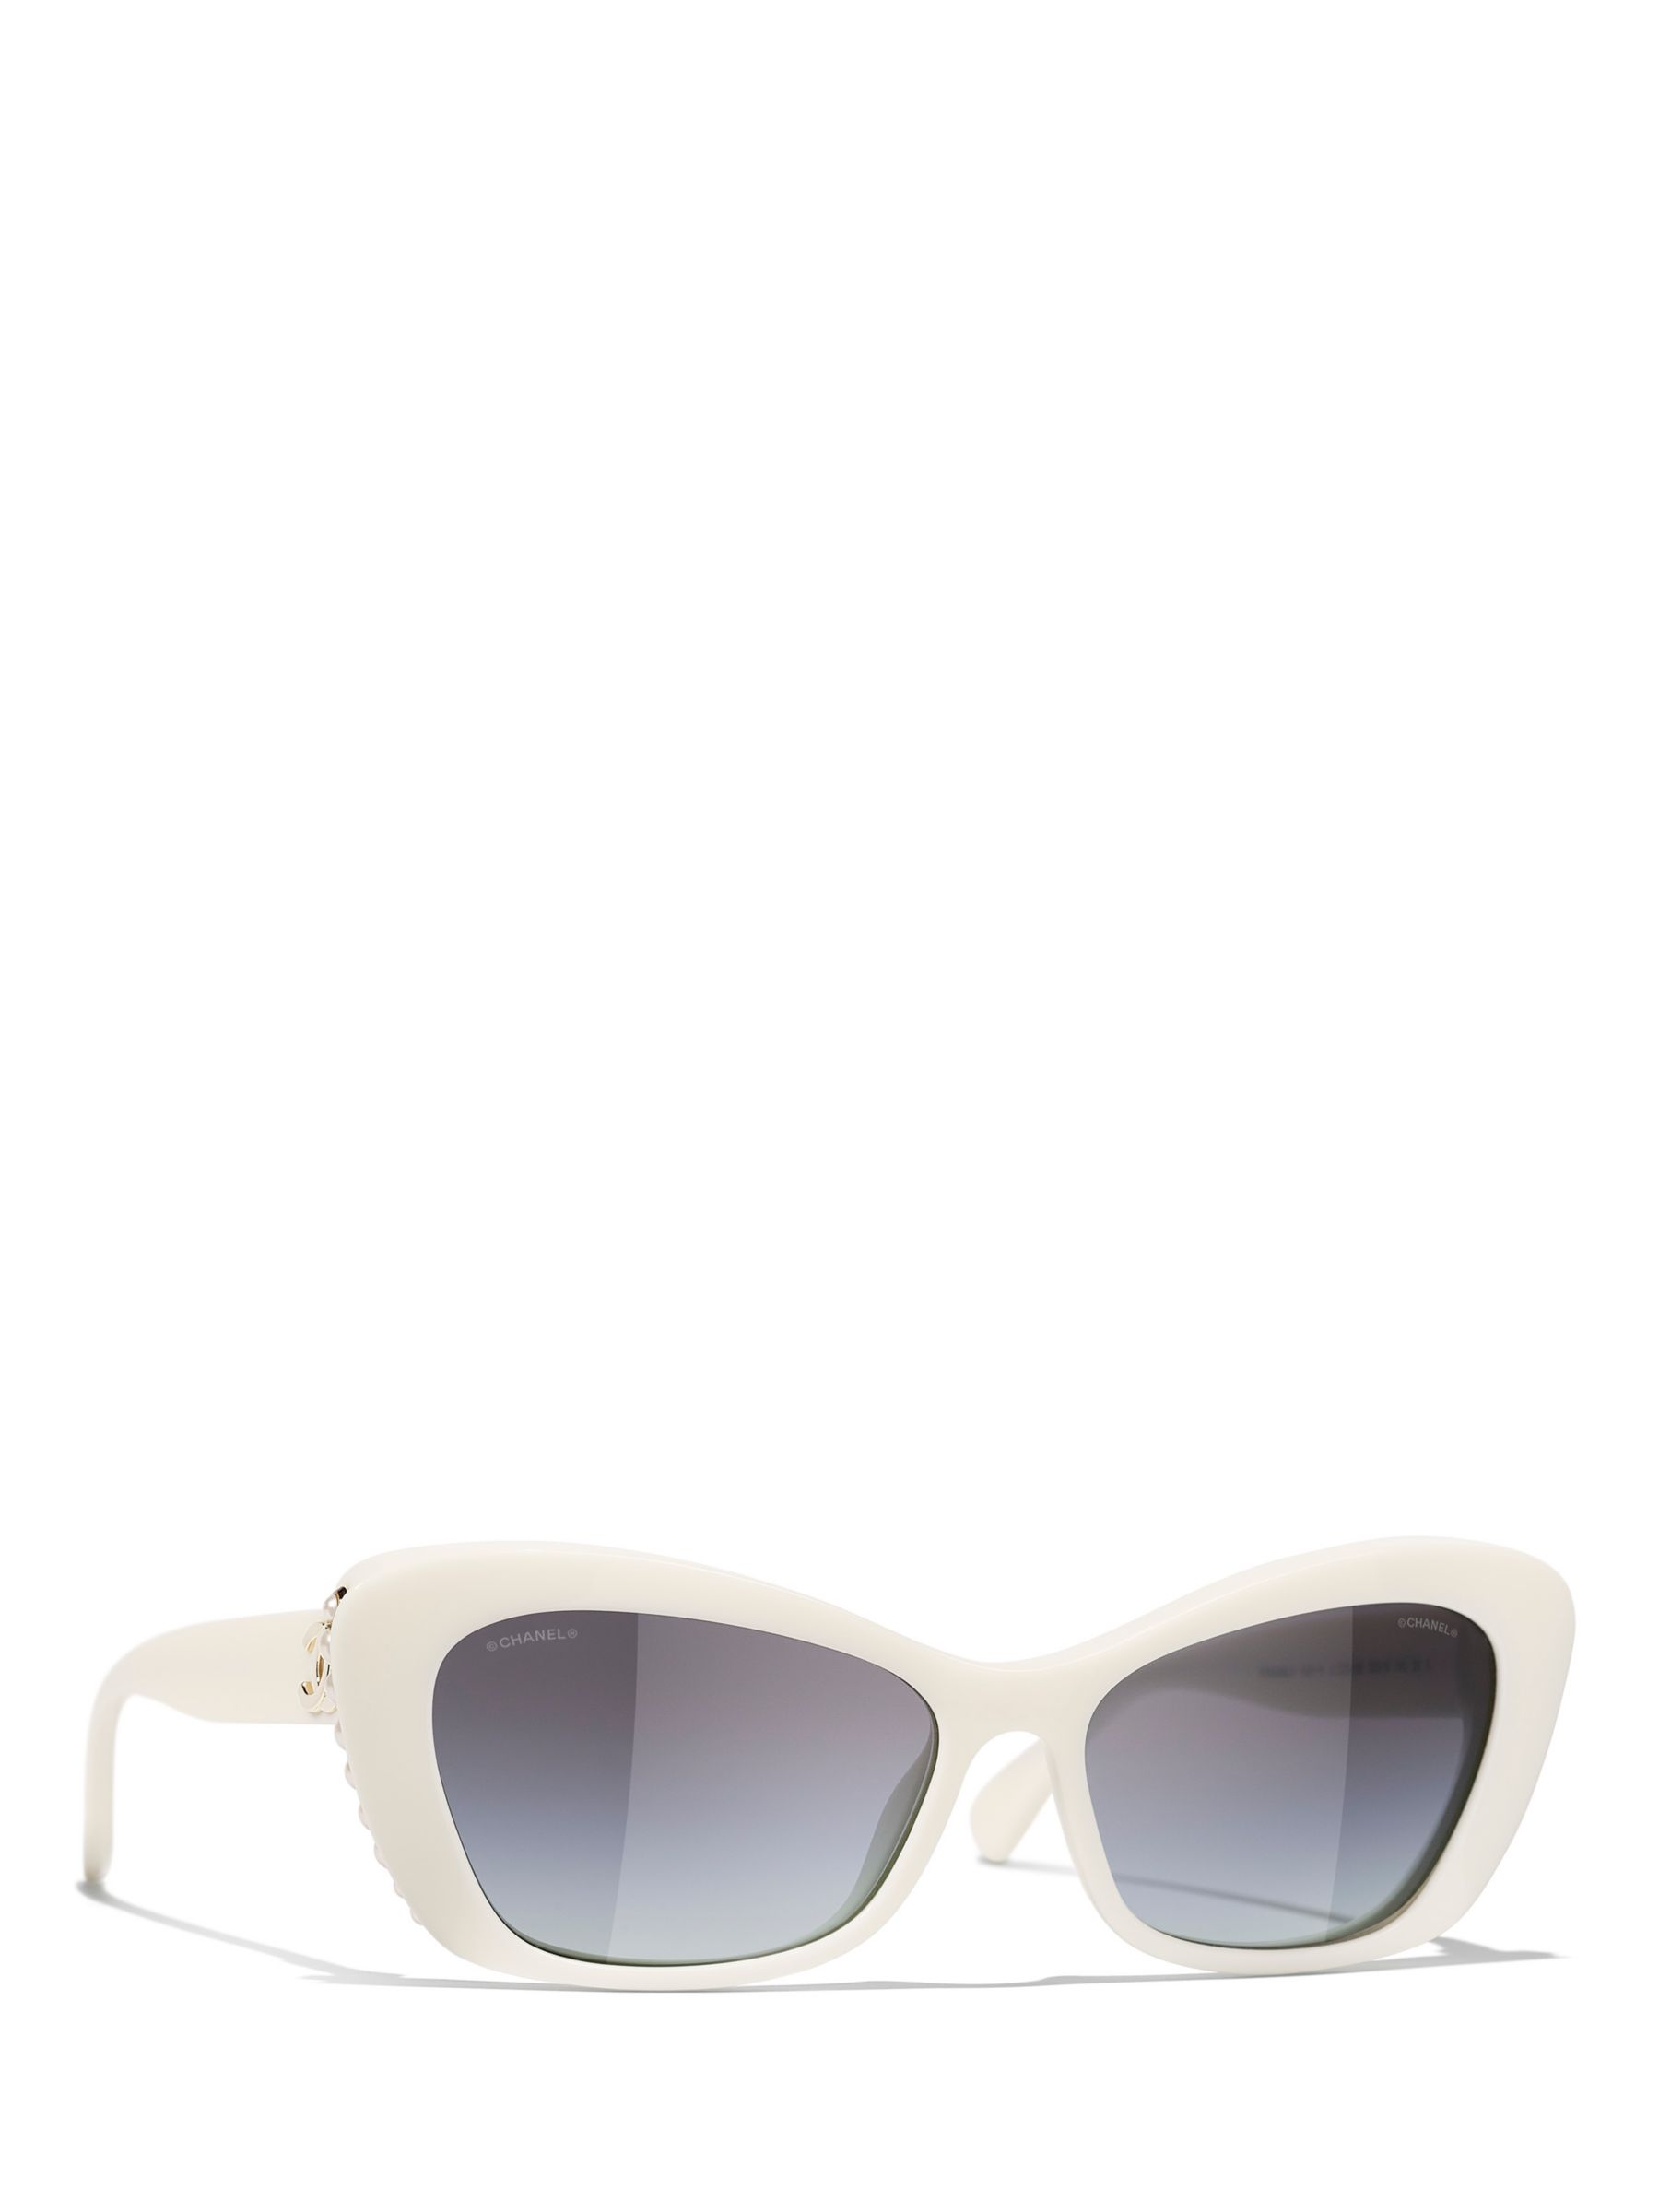 Chanel Women's Party Sunglasses - White